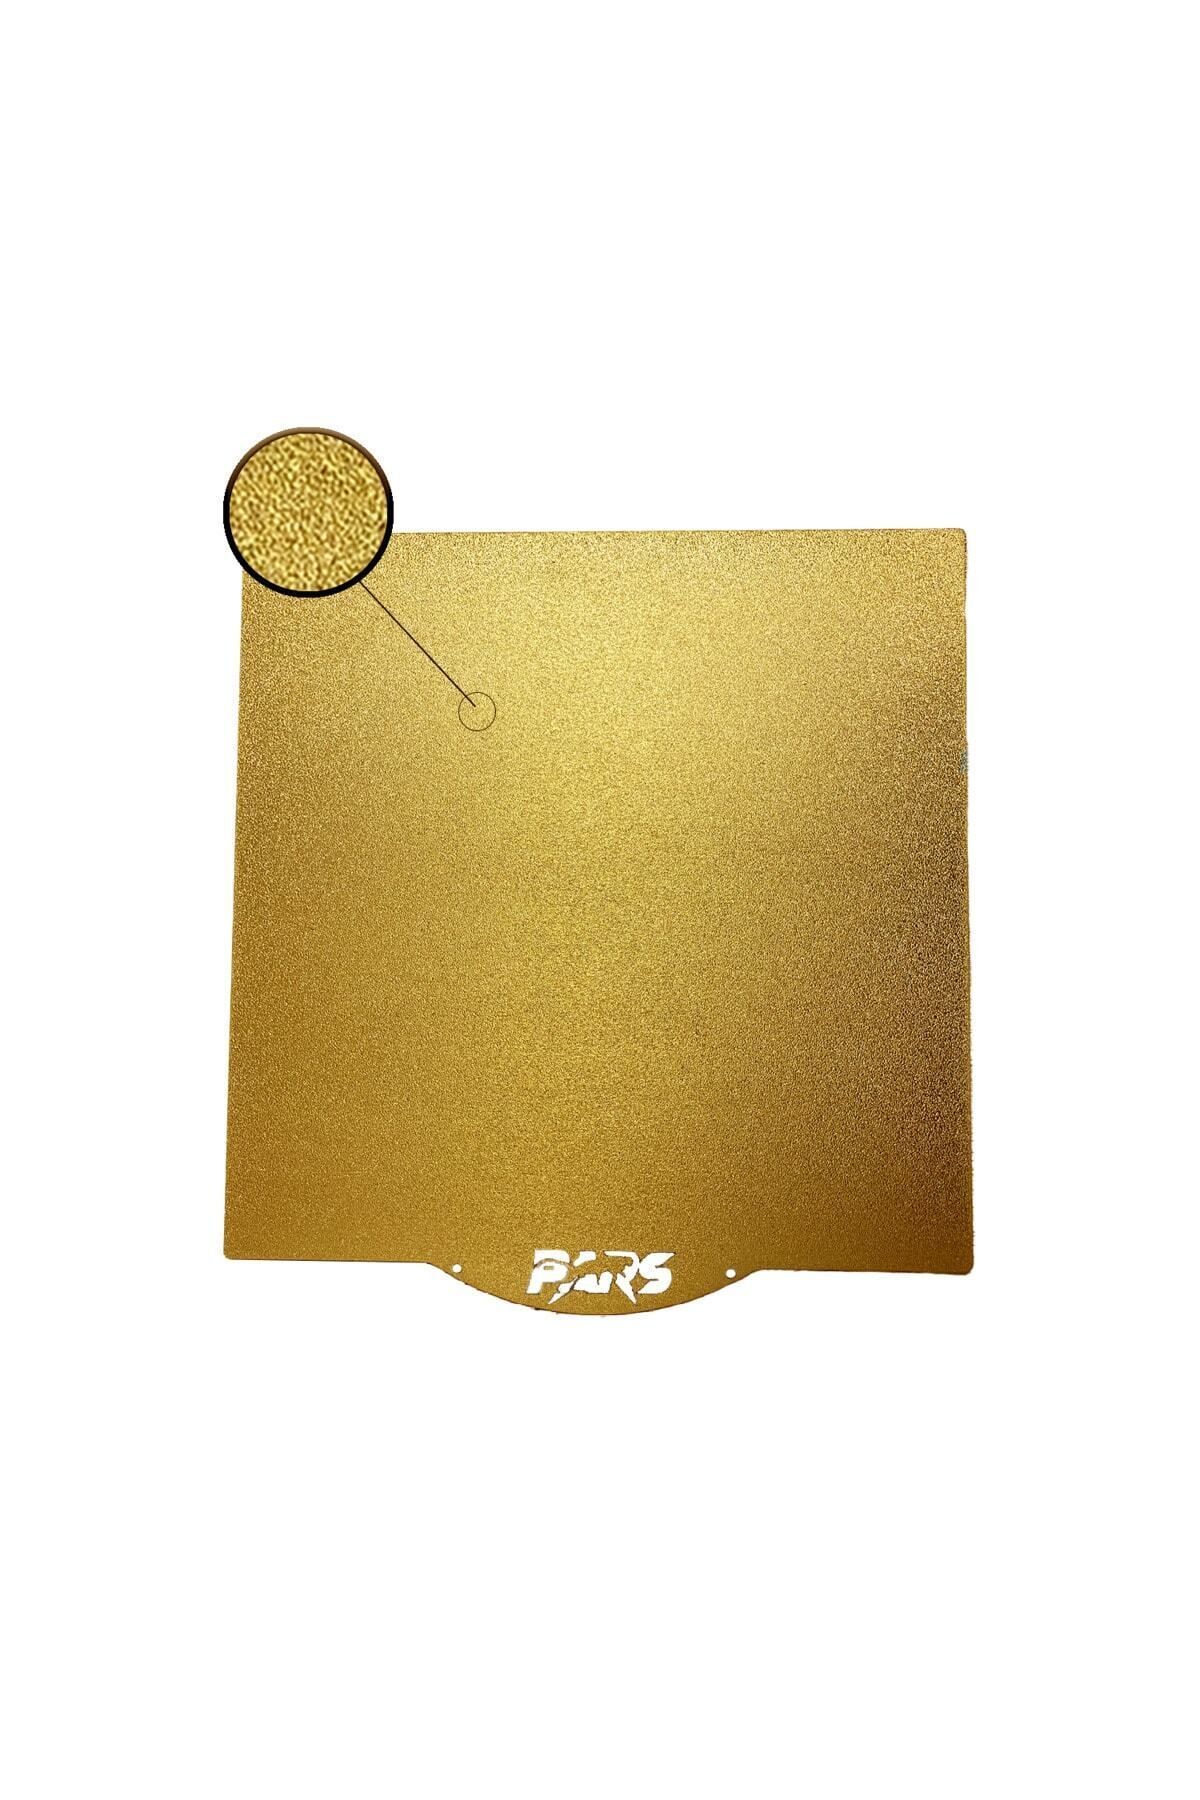 Pars 310x315 Mm Ender 3 S1 Plus Gold Pei Kaplı Özel Yay Çeliği Tabla Magnetsiz